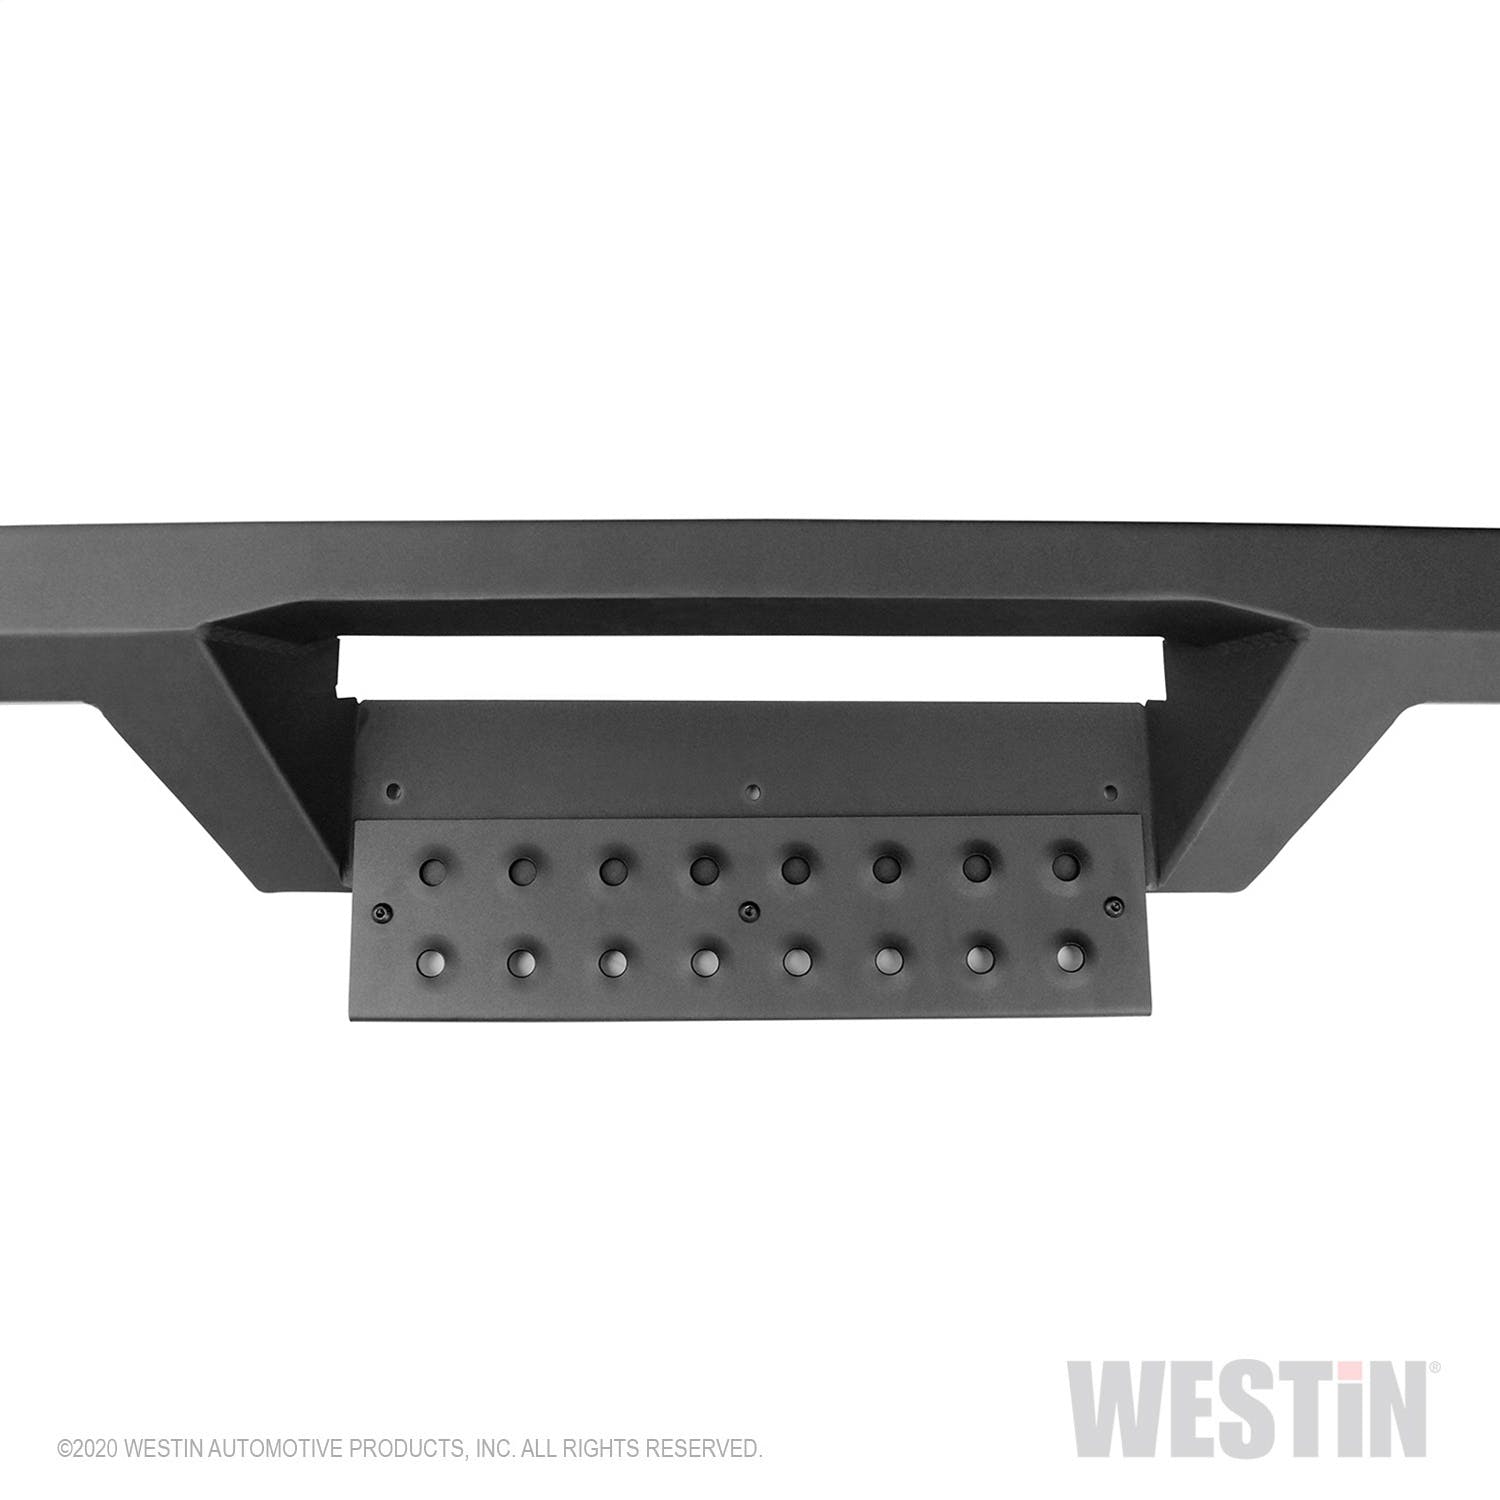 Westin Automotive 56-534765 HDX Drop Wheel-to-Wheel Nerf Step Bars